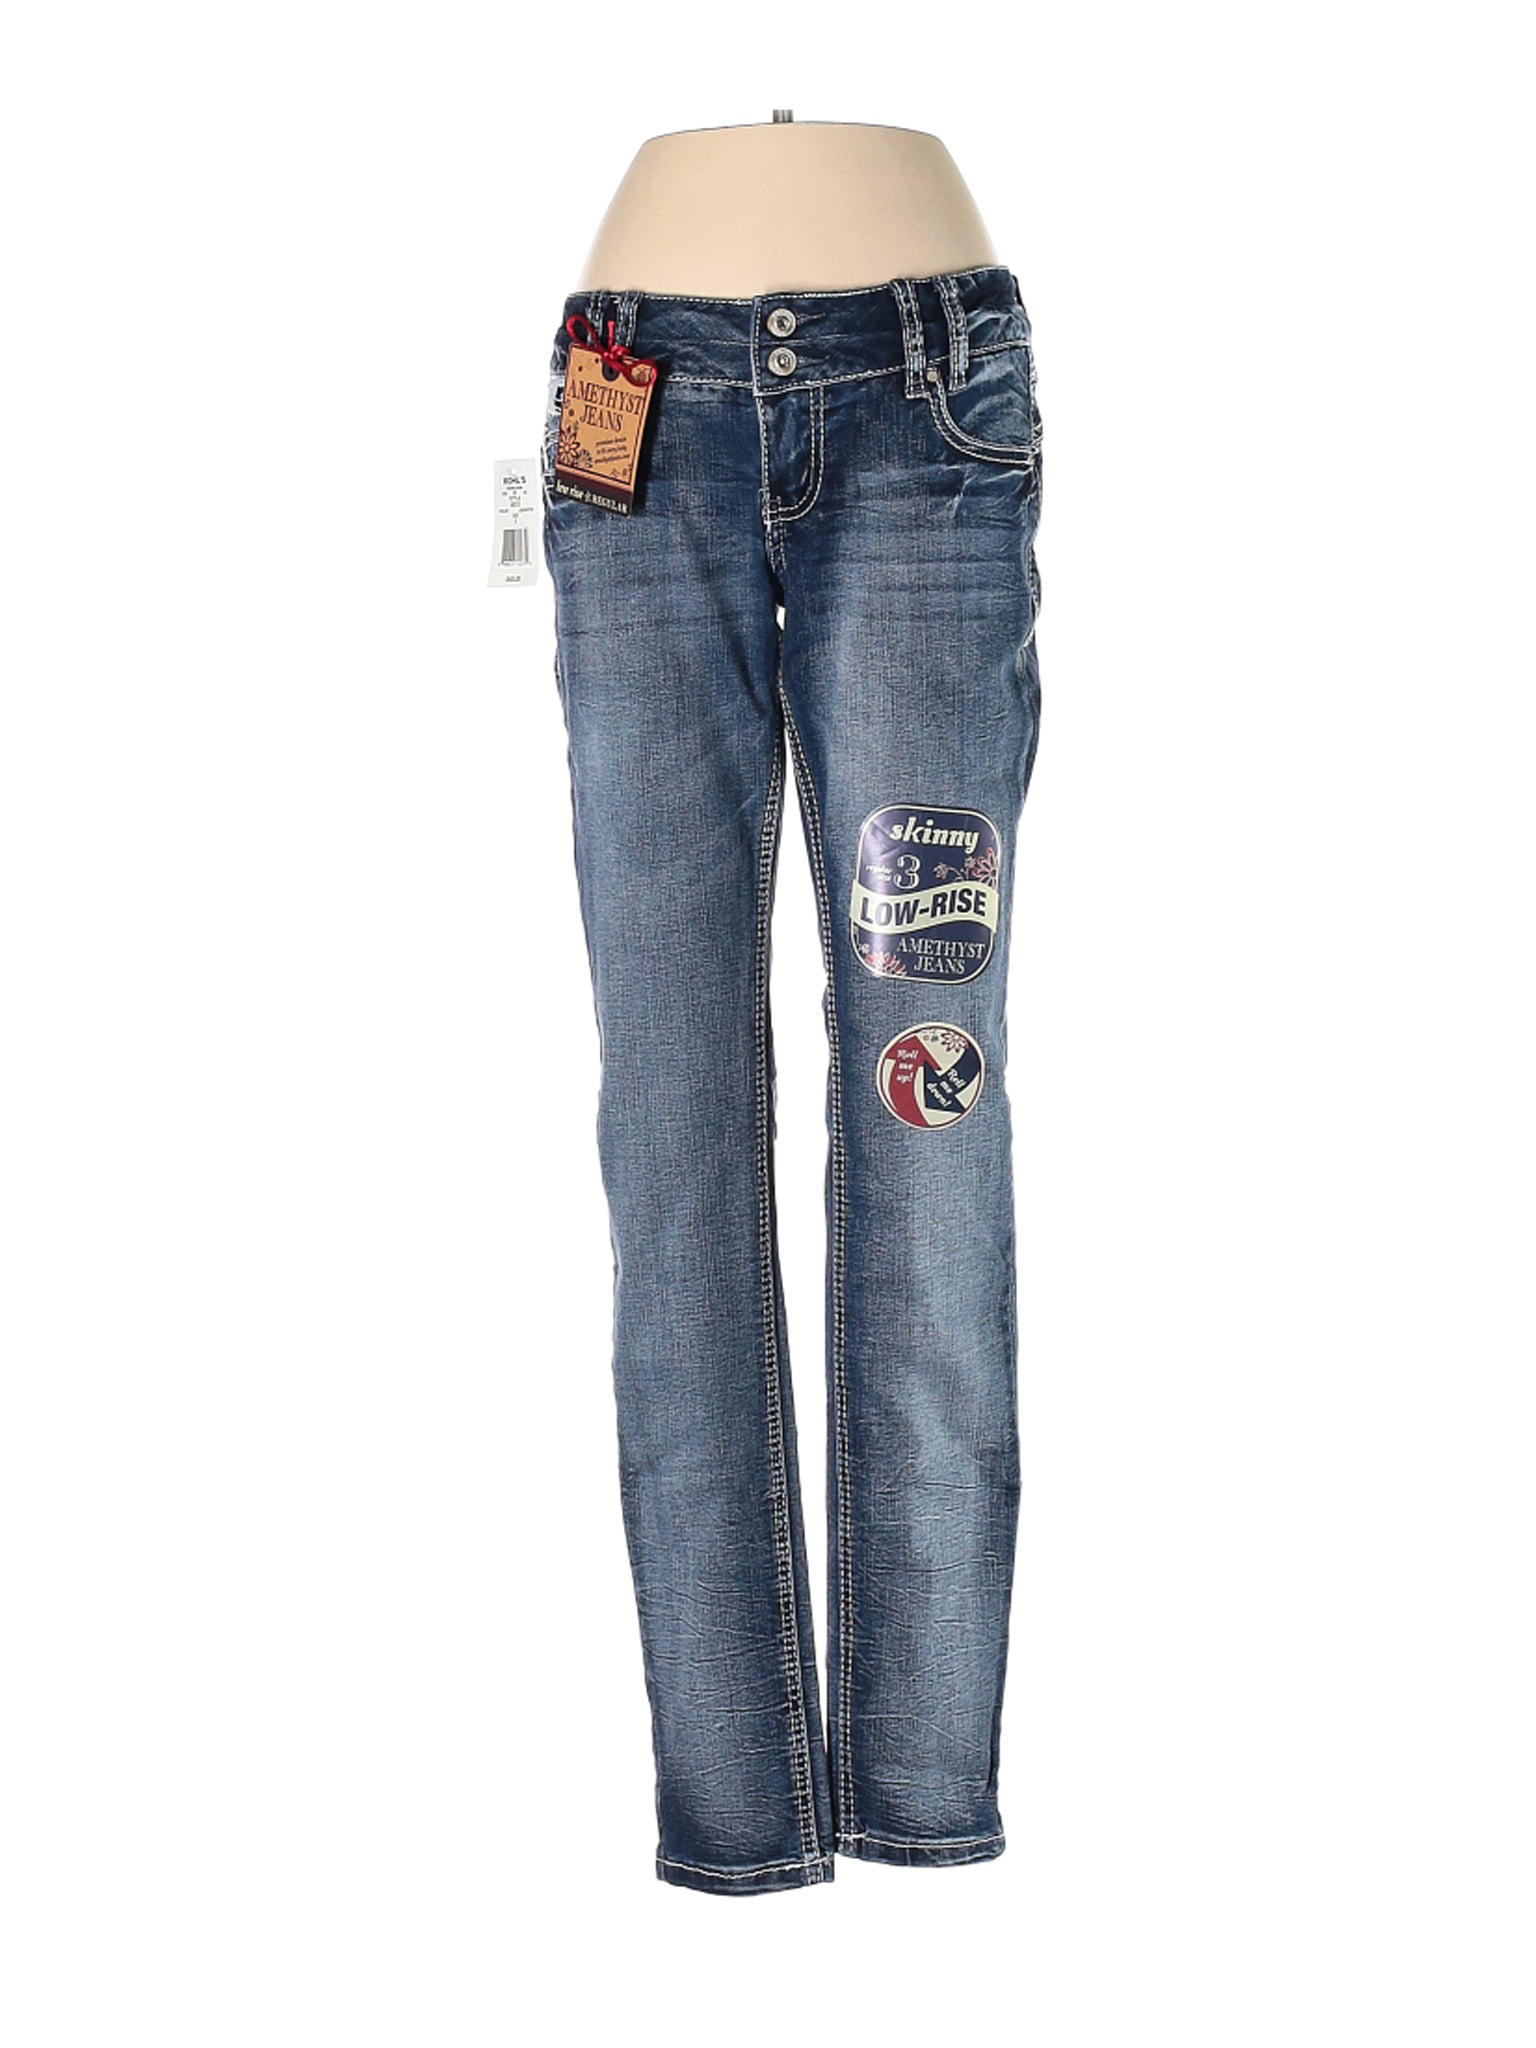 amethyst jeans